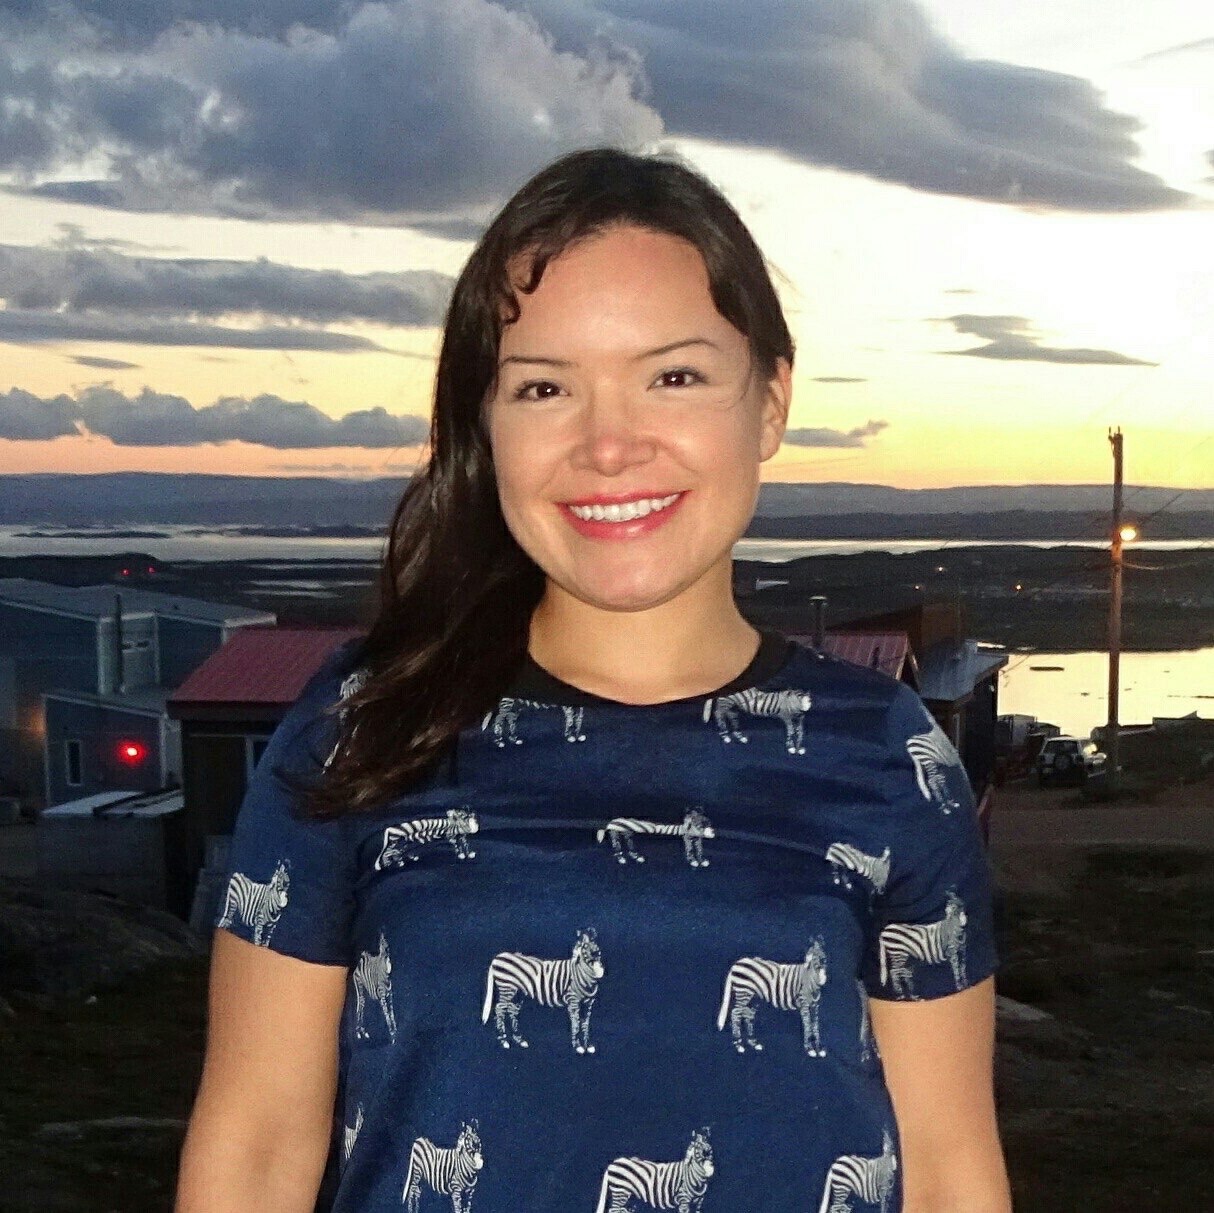 Photo taken in August 2015 in Iqaluit, Nunavut, Canada